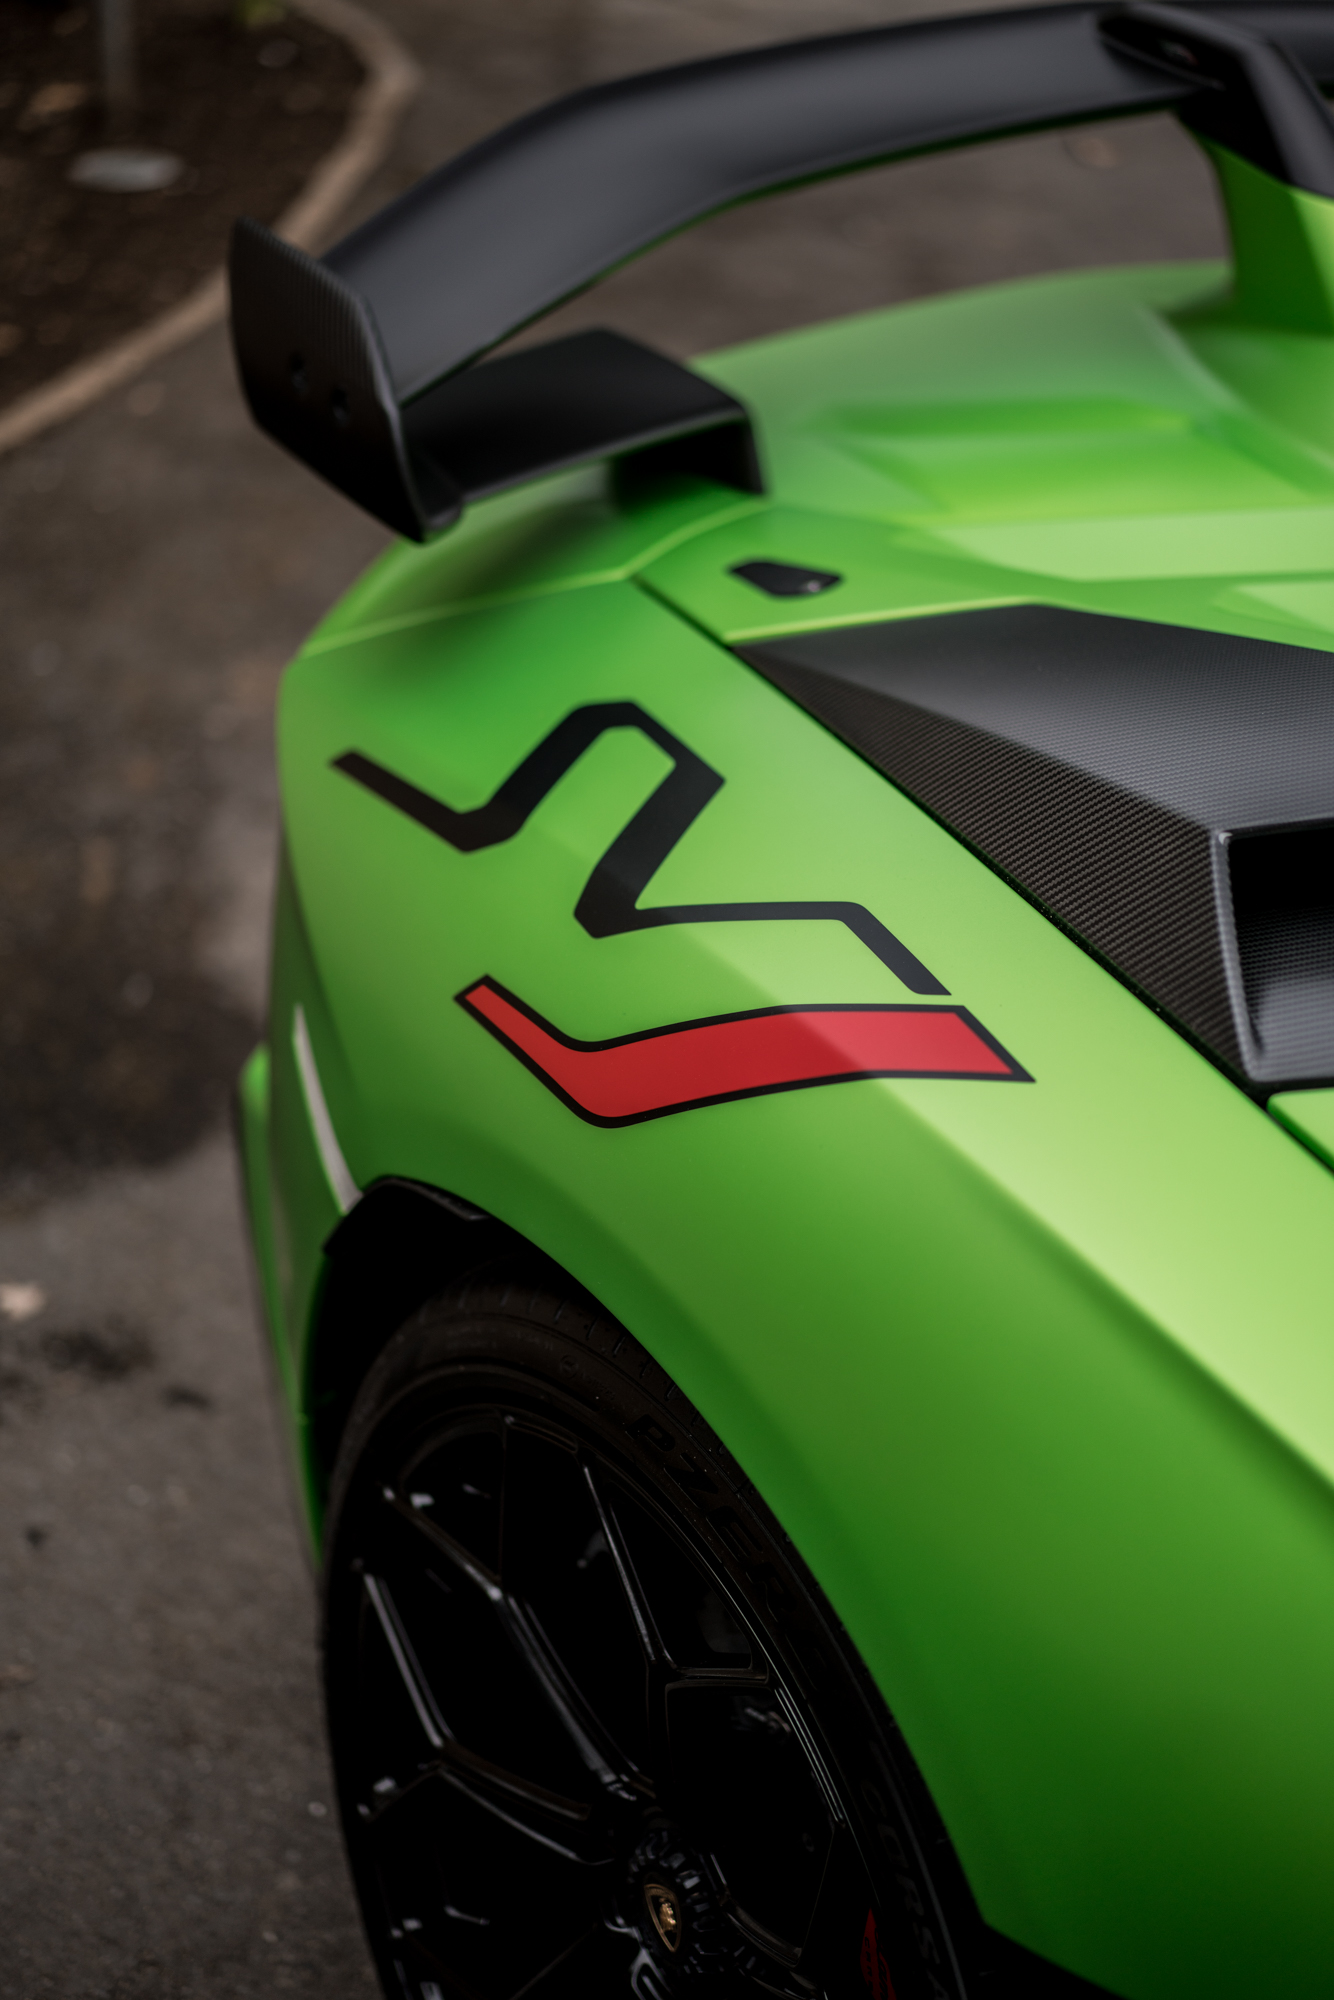 View Photos of the 2020 Lamborghini Aventador SVJ Roadster